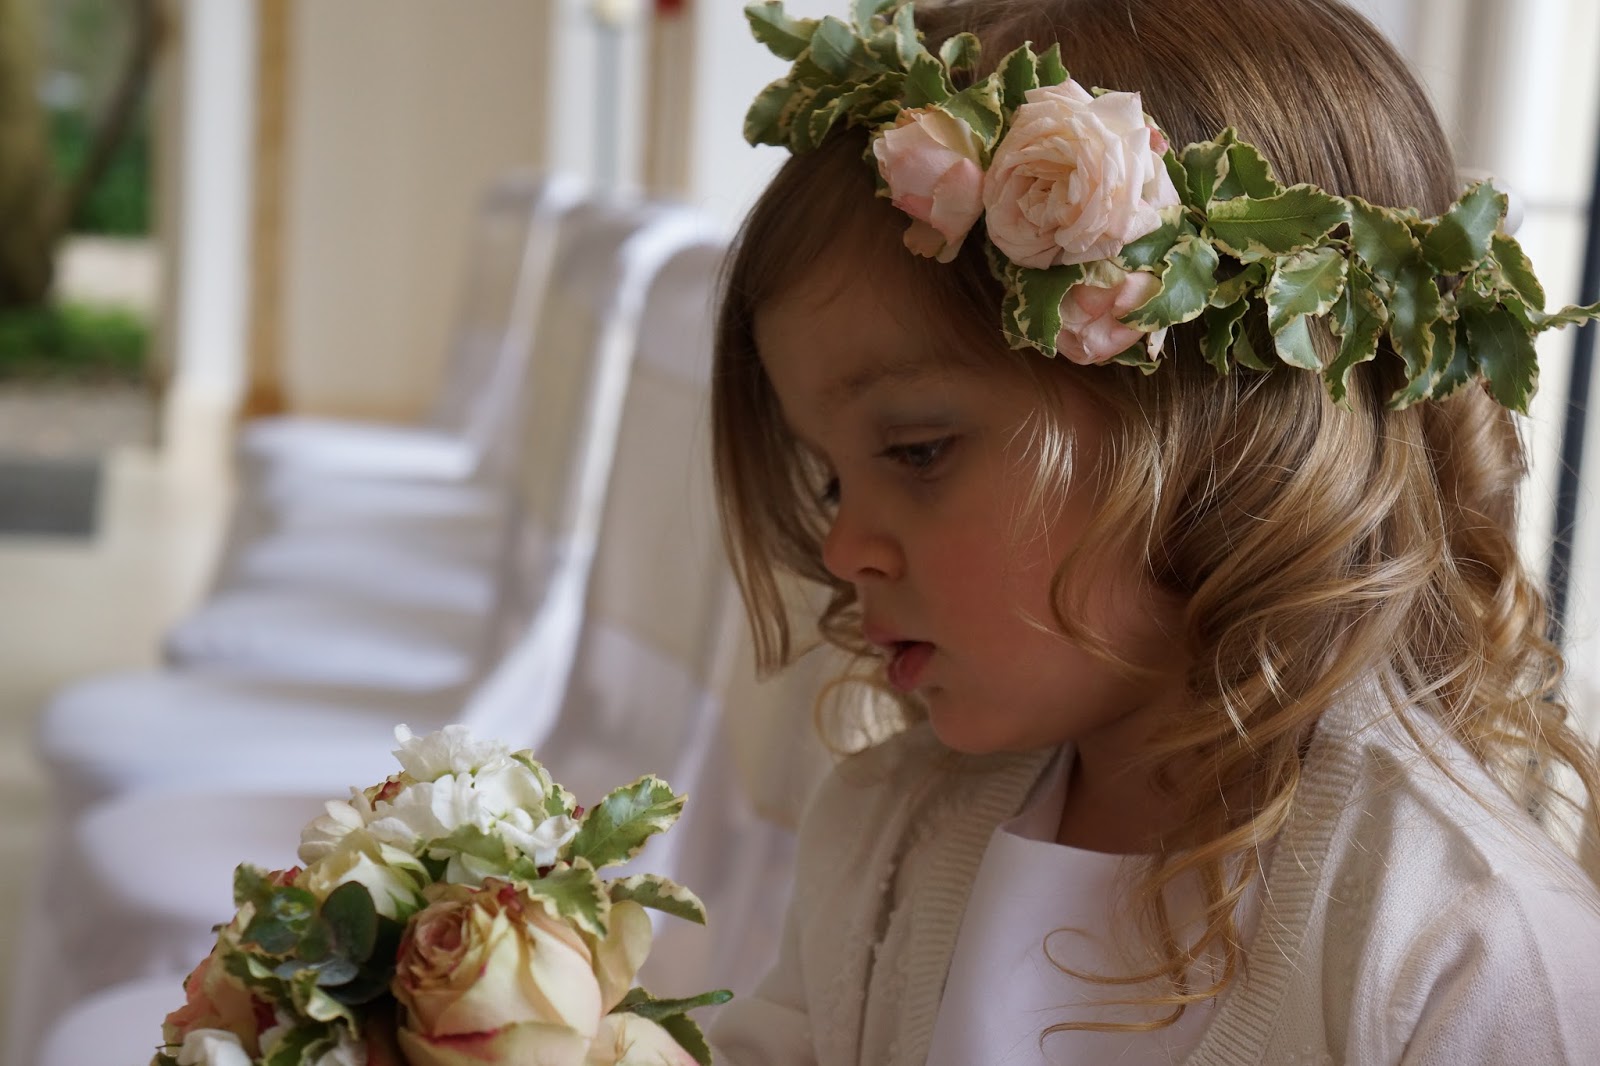 Flower Girl Hairstyles: 25 Ideas to Slay Weddings